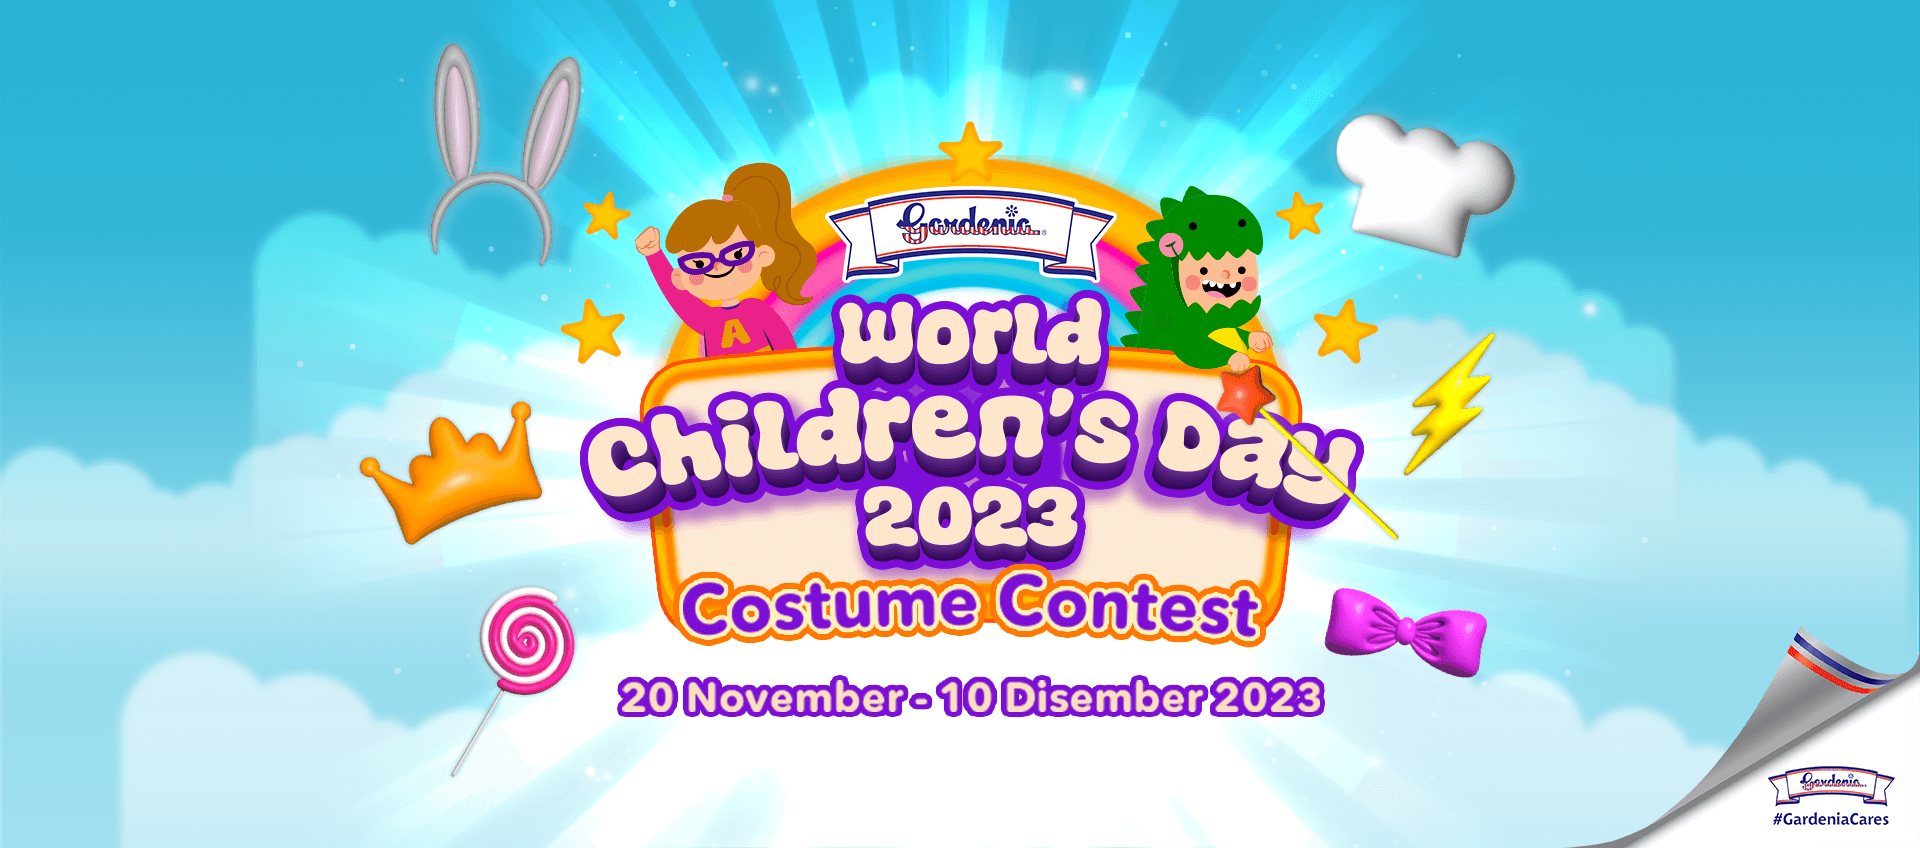 Gardenia World Children’s Day 2023 Costume Contest